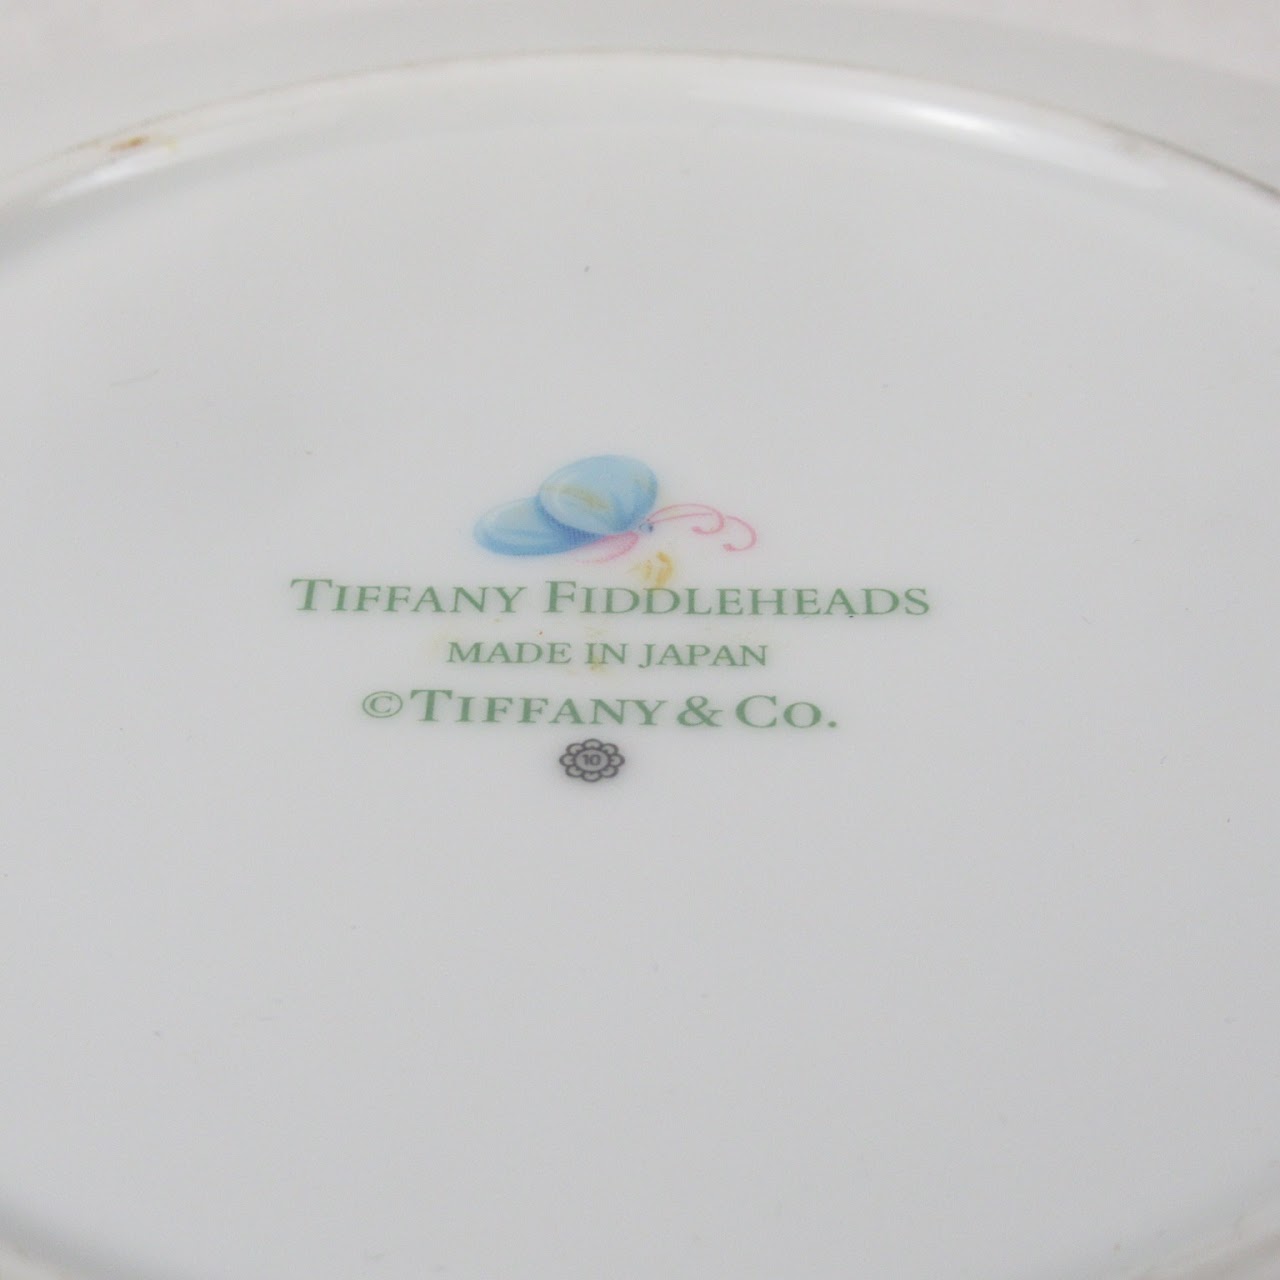 Tiffany & Co. 'Tiffany Fiddlheads' Dish Lot